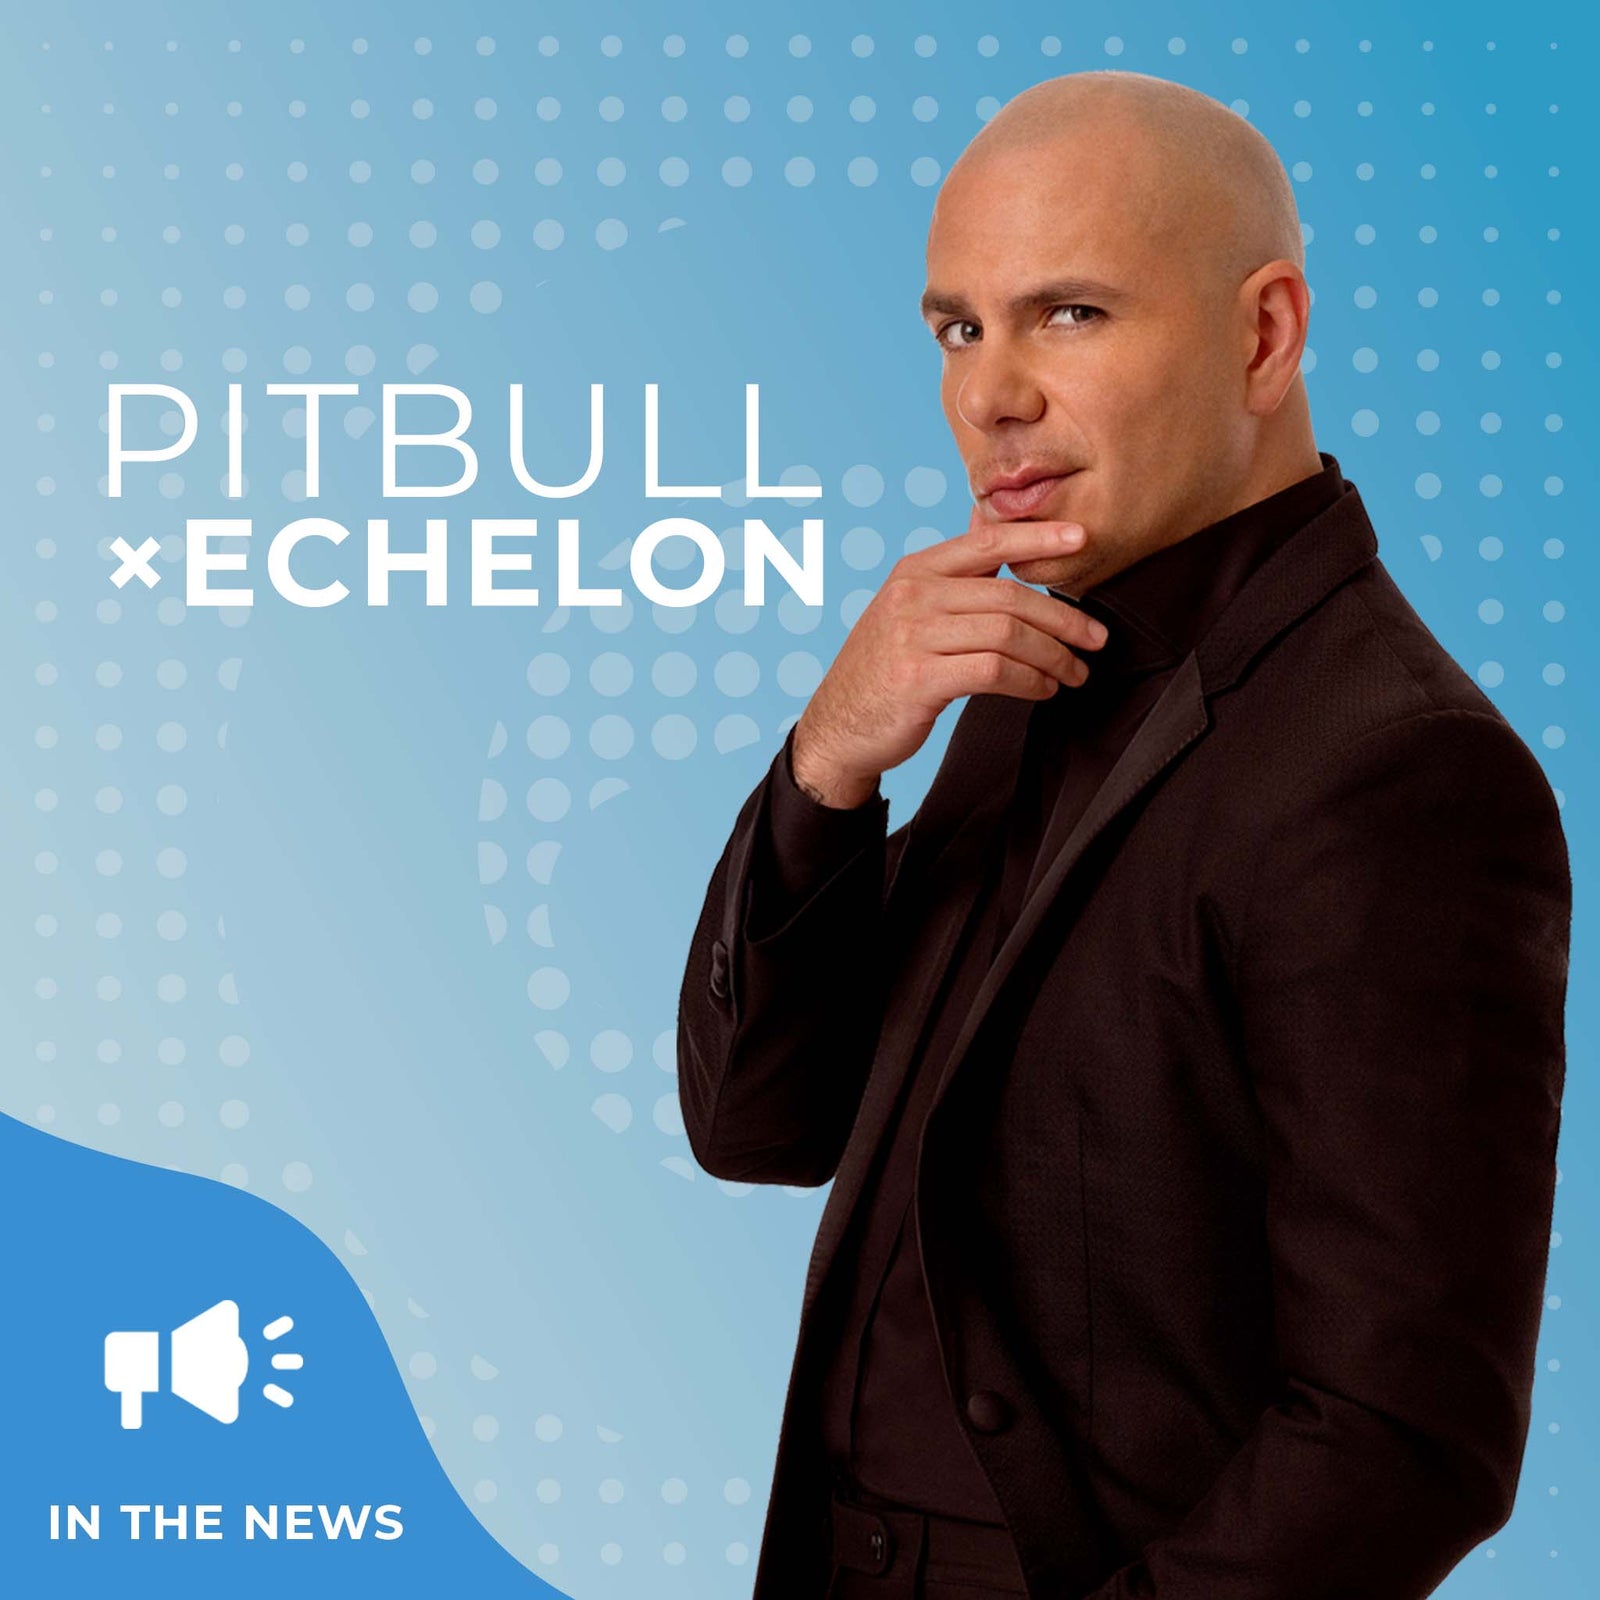 Pitbull wearing black on a light blue background with text "Pitbull x Echelon"